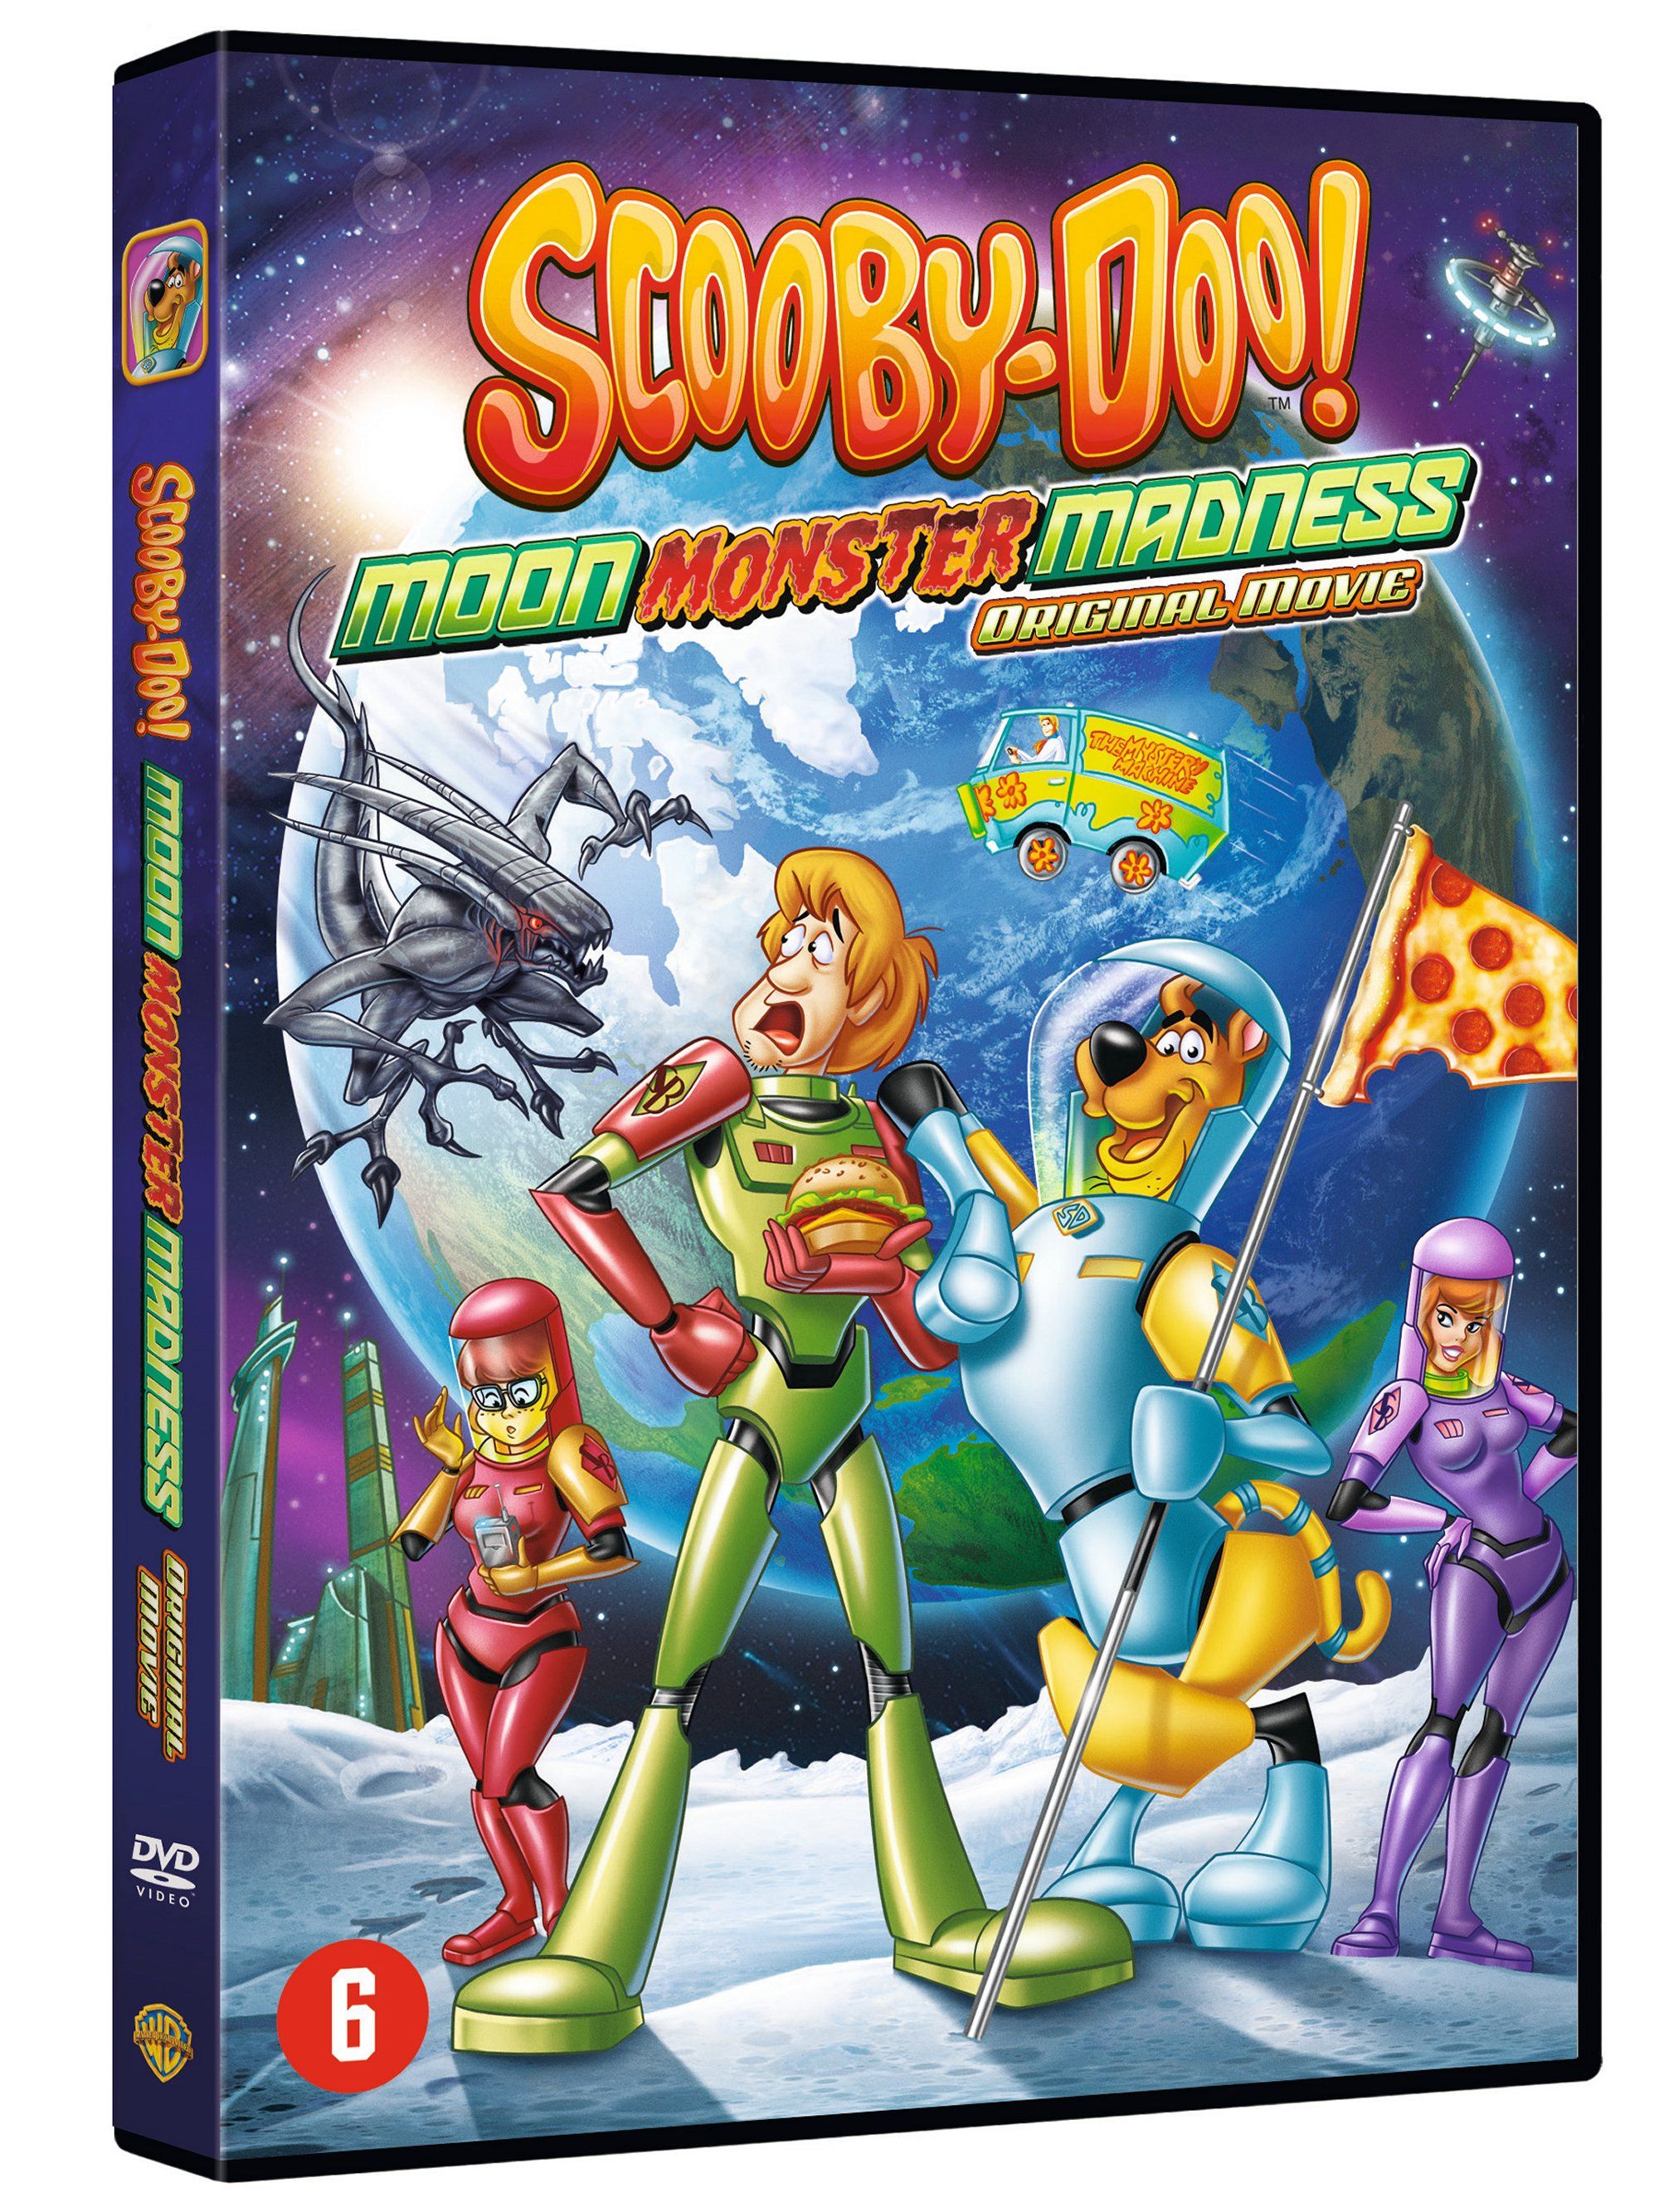 Scooby Doo 2 full movie online free